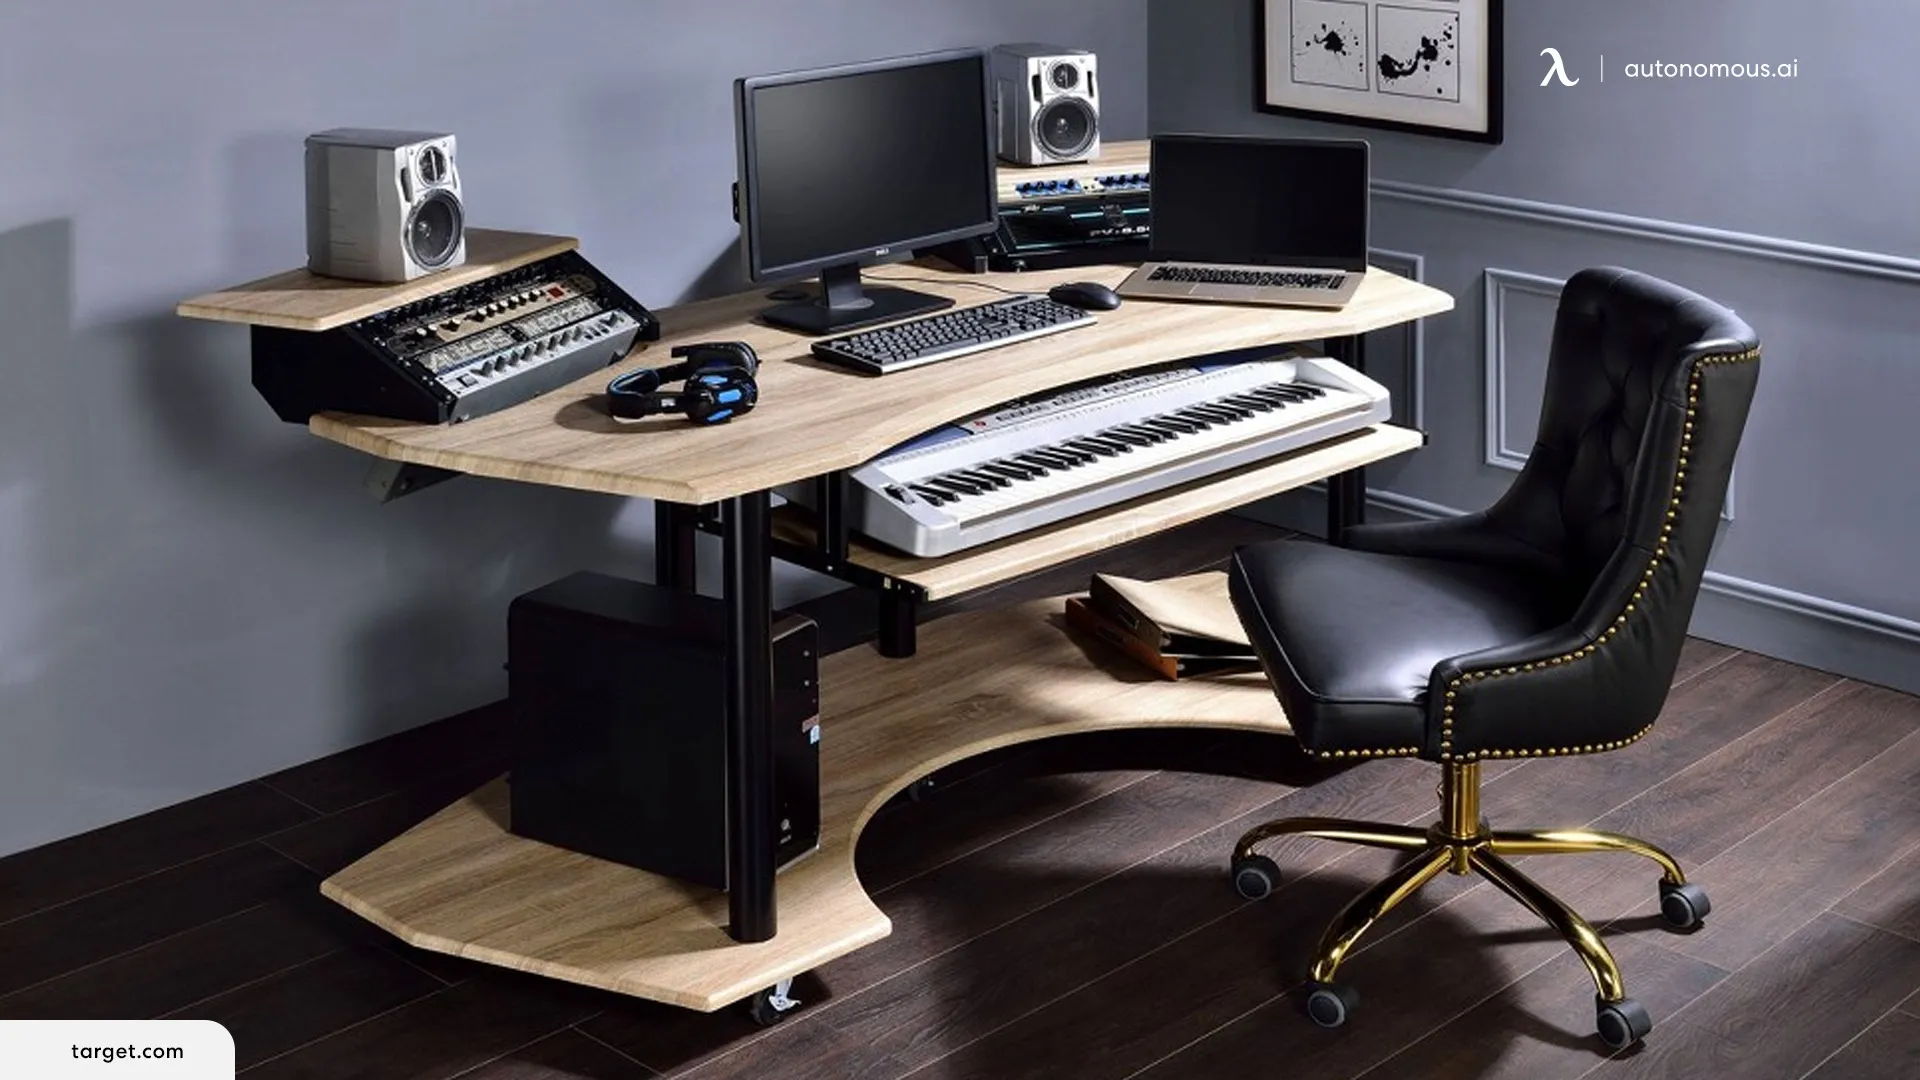 High-quality Materials - Unique desk